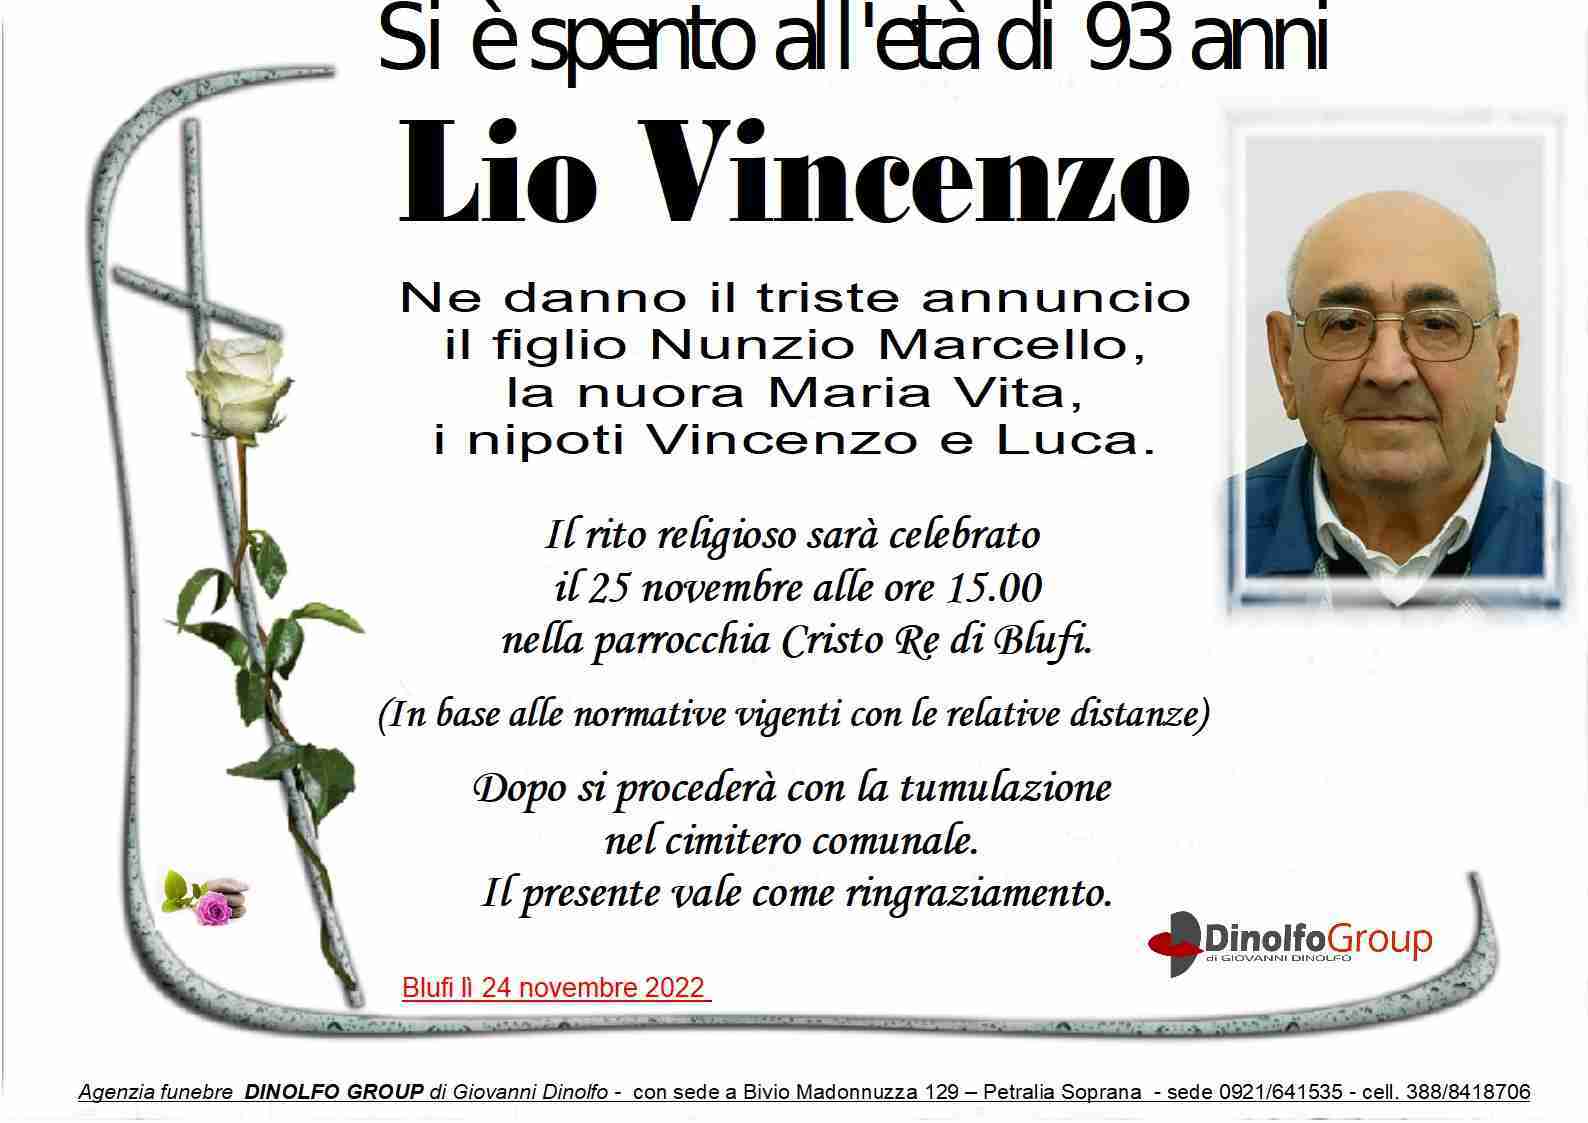 Vincenzo Lio